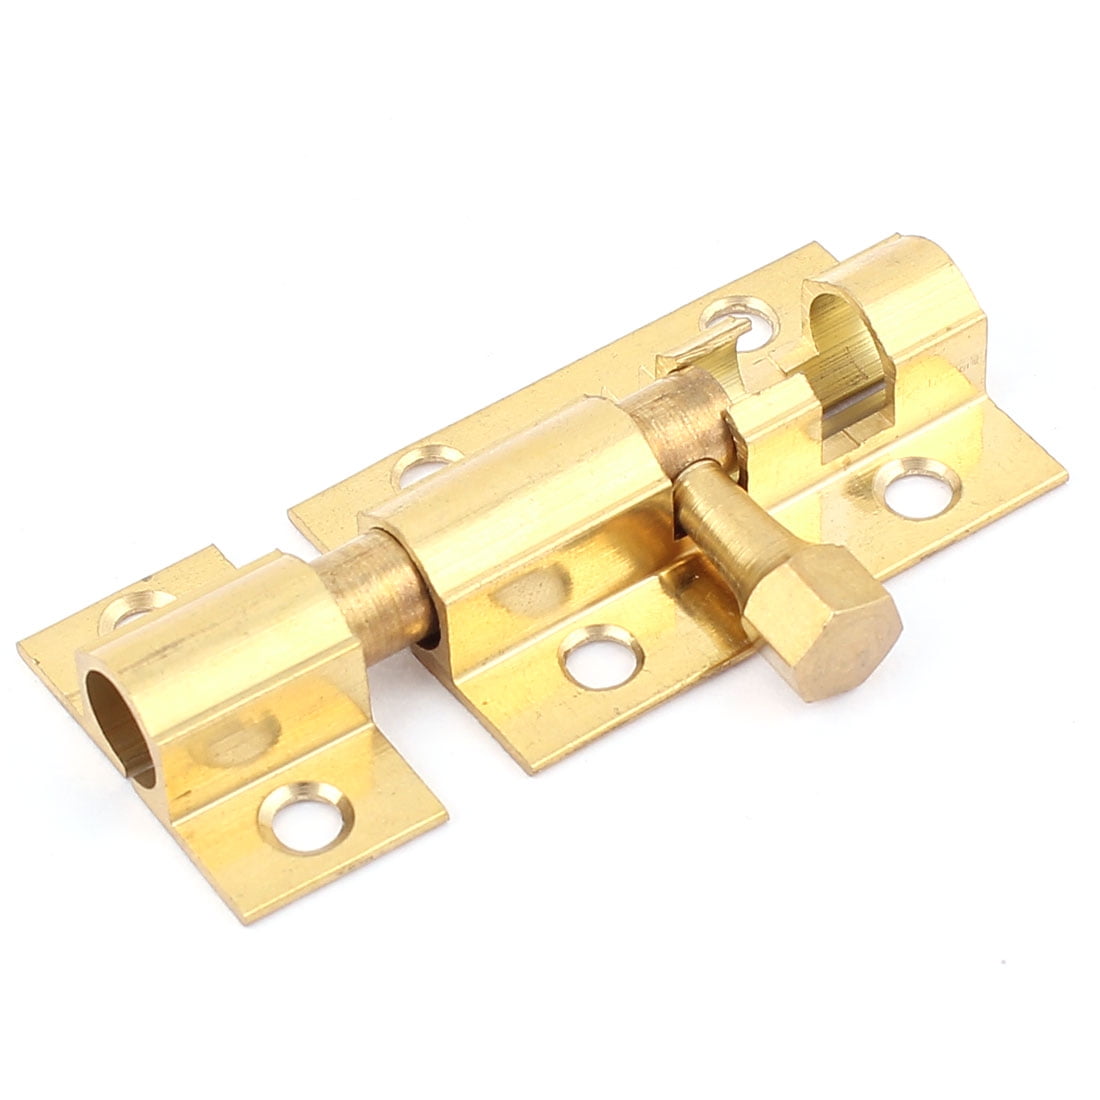 Motorcycles Antique Finish Brass Lock W/ Two Keys 3.75”x3.75”x1.25” 